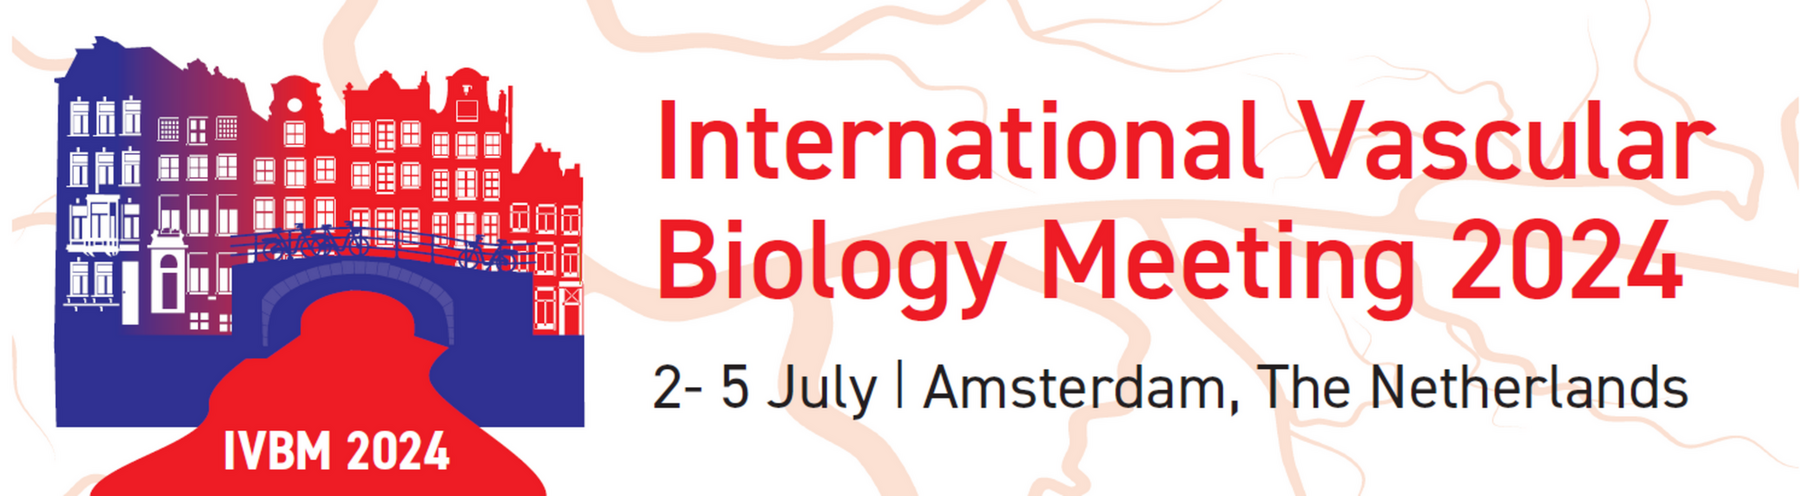 International Vascular Biology Meeting 2024